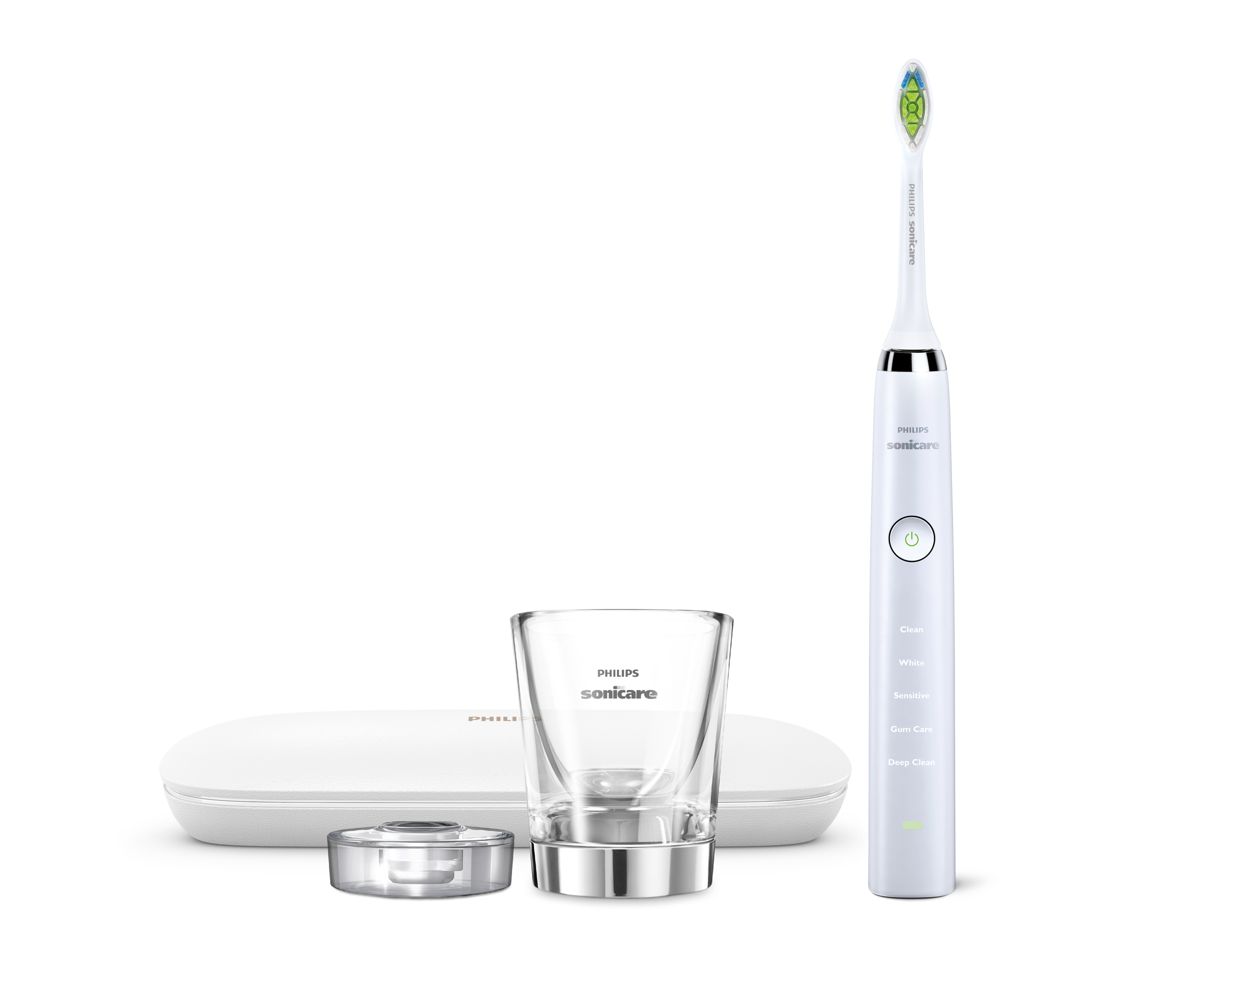 DiamondClean Sonic electric toothbrush HX9331/43